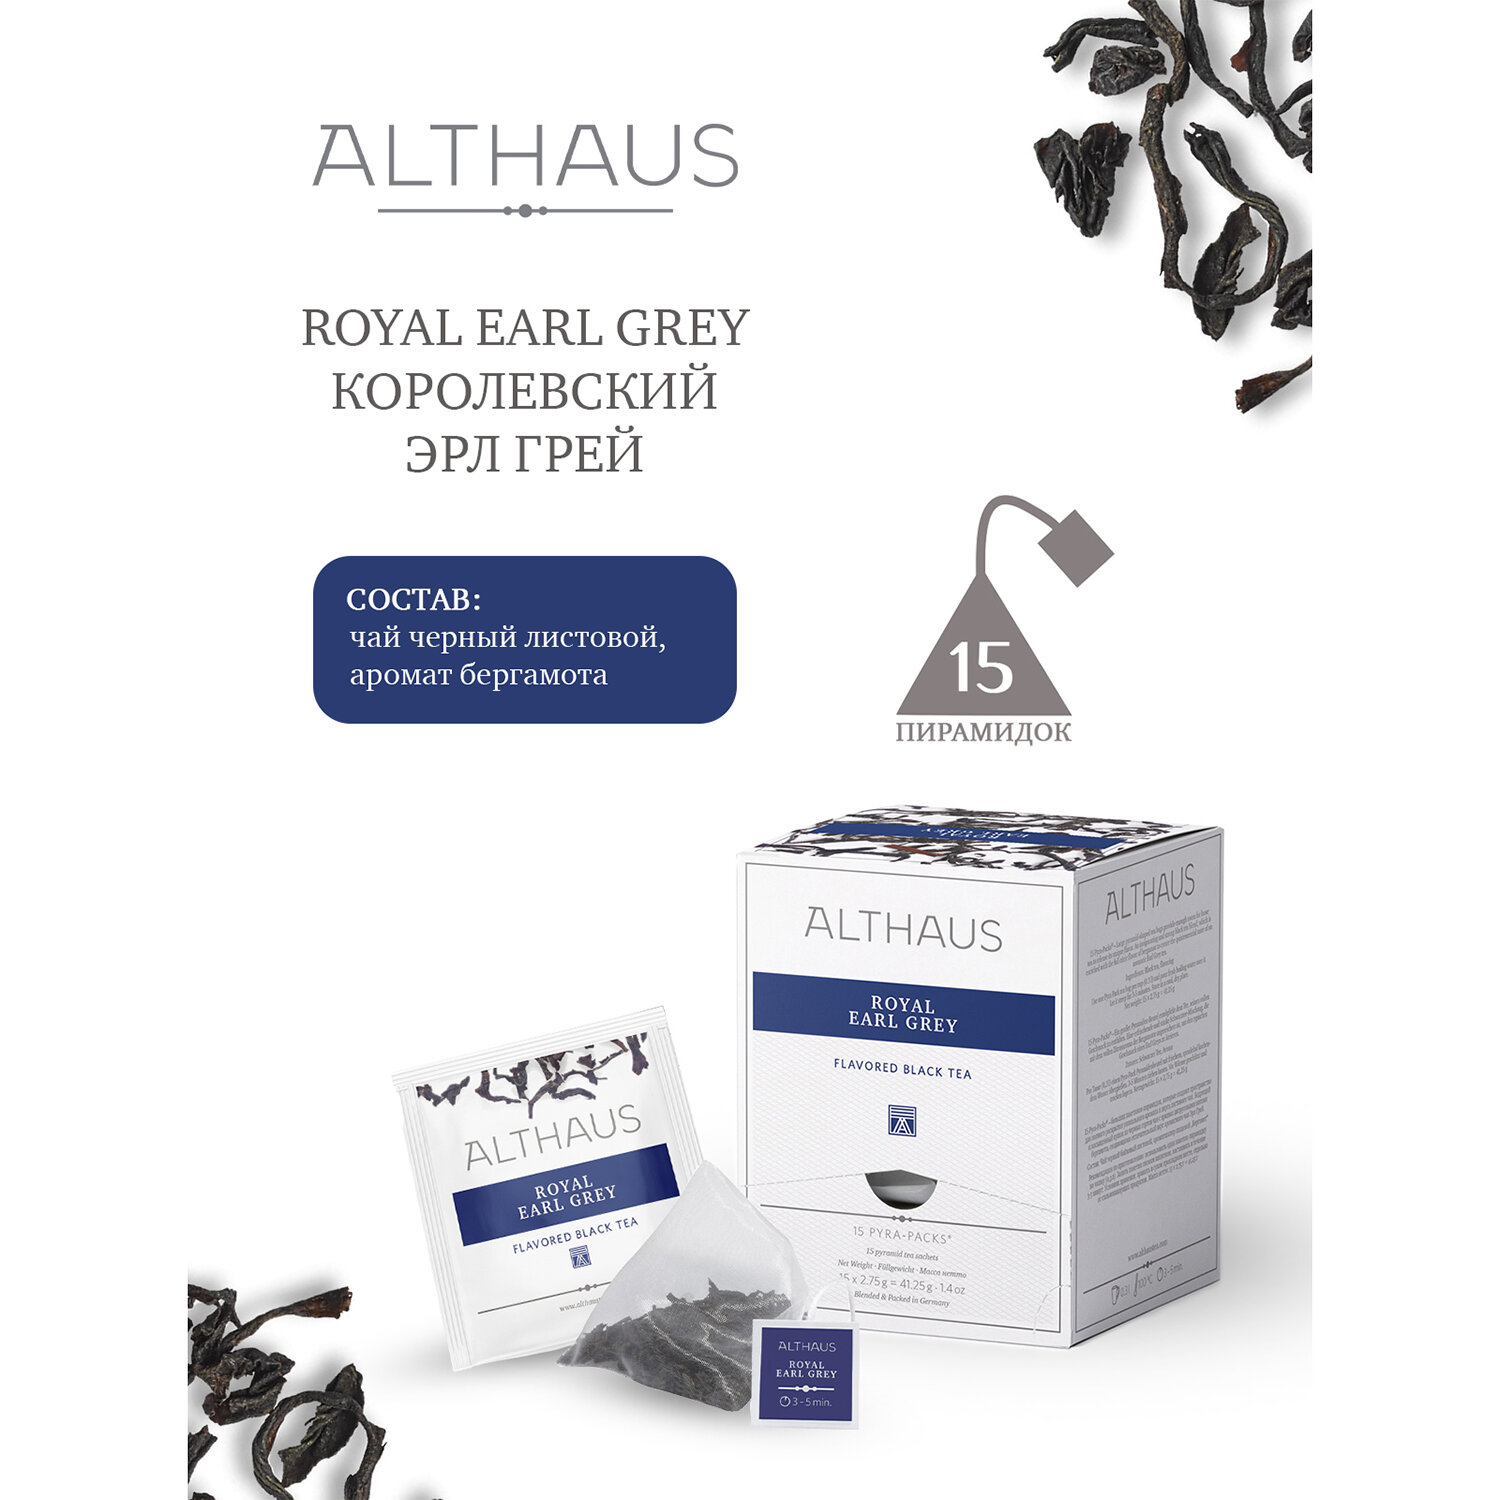 ALTHAUS  ALTHAUS TALTHL-P00004 Royal Earl Grey, , 15   2,75 